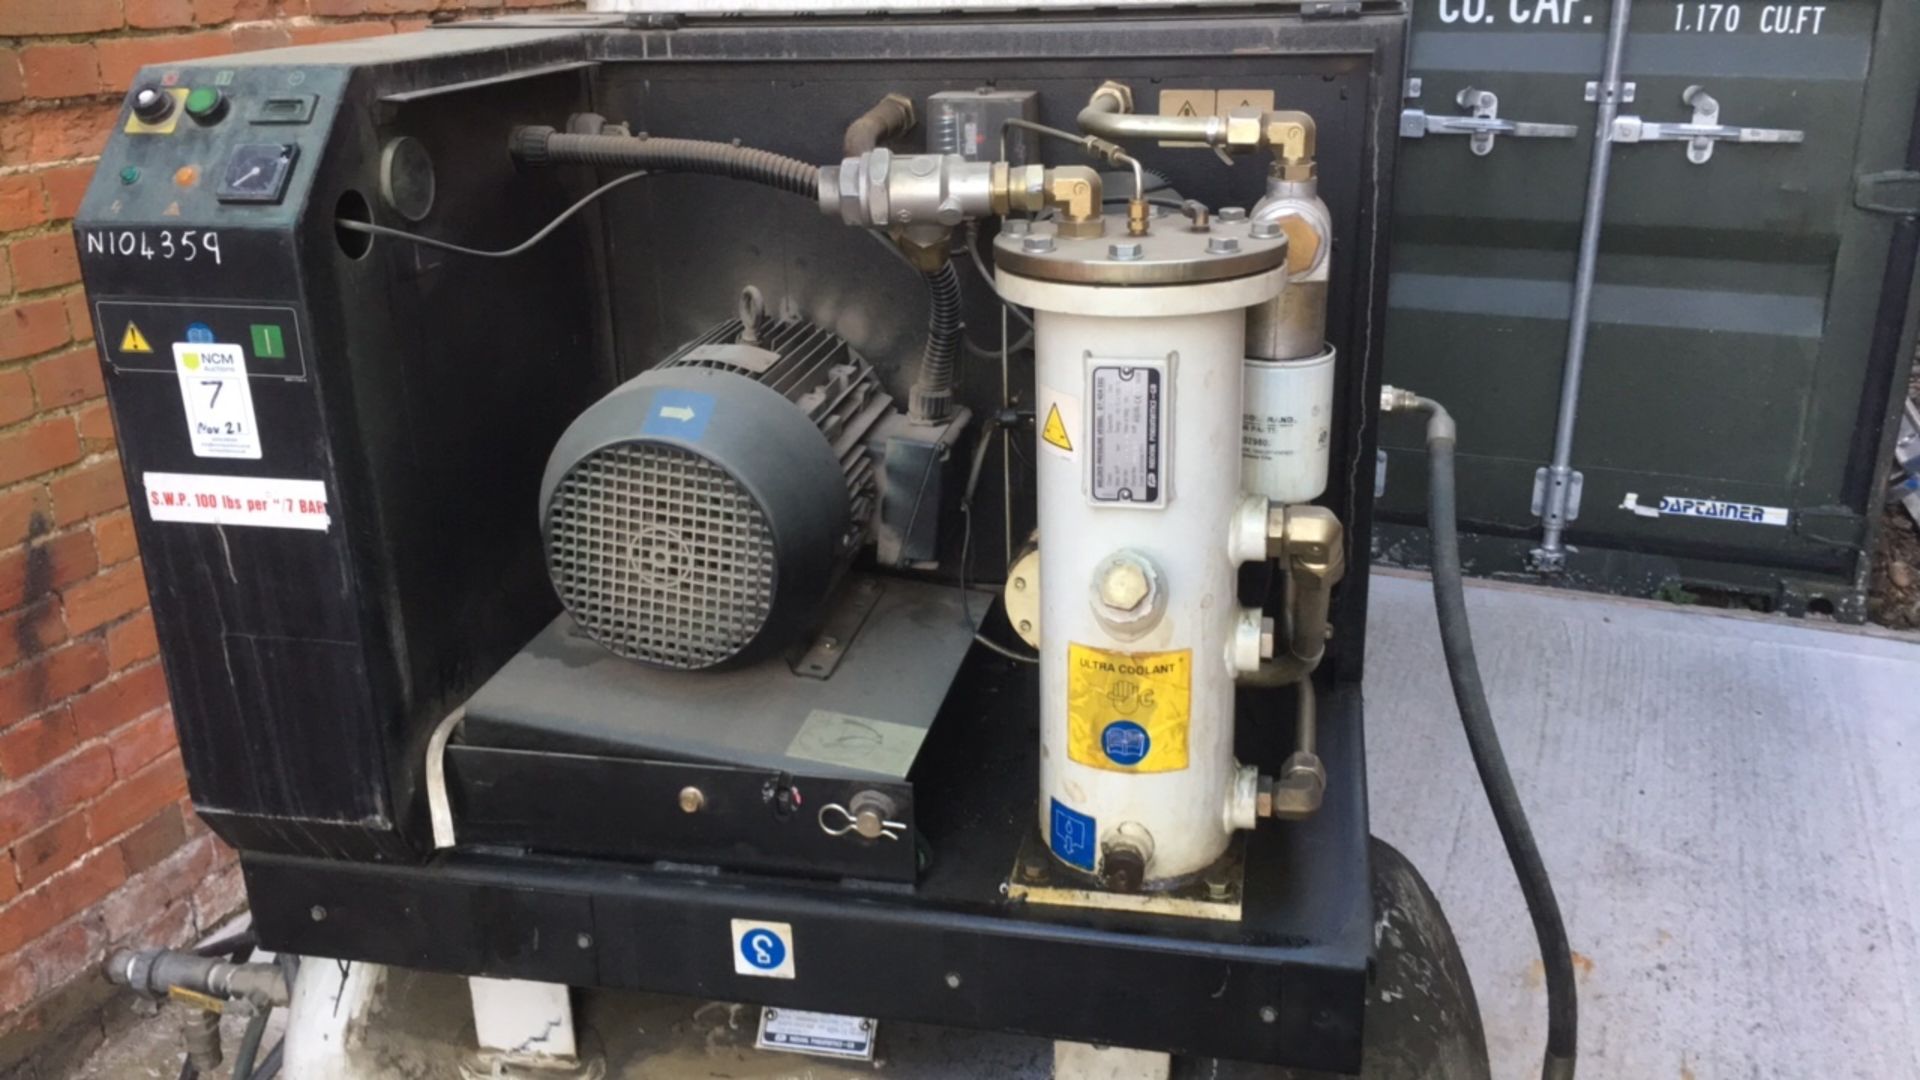 Ingersoll Rand SSR ML7.5 compressor (999, N104359) - Image 2 of 8